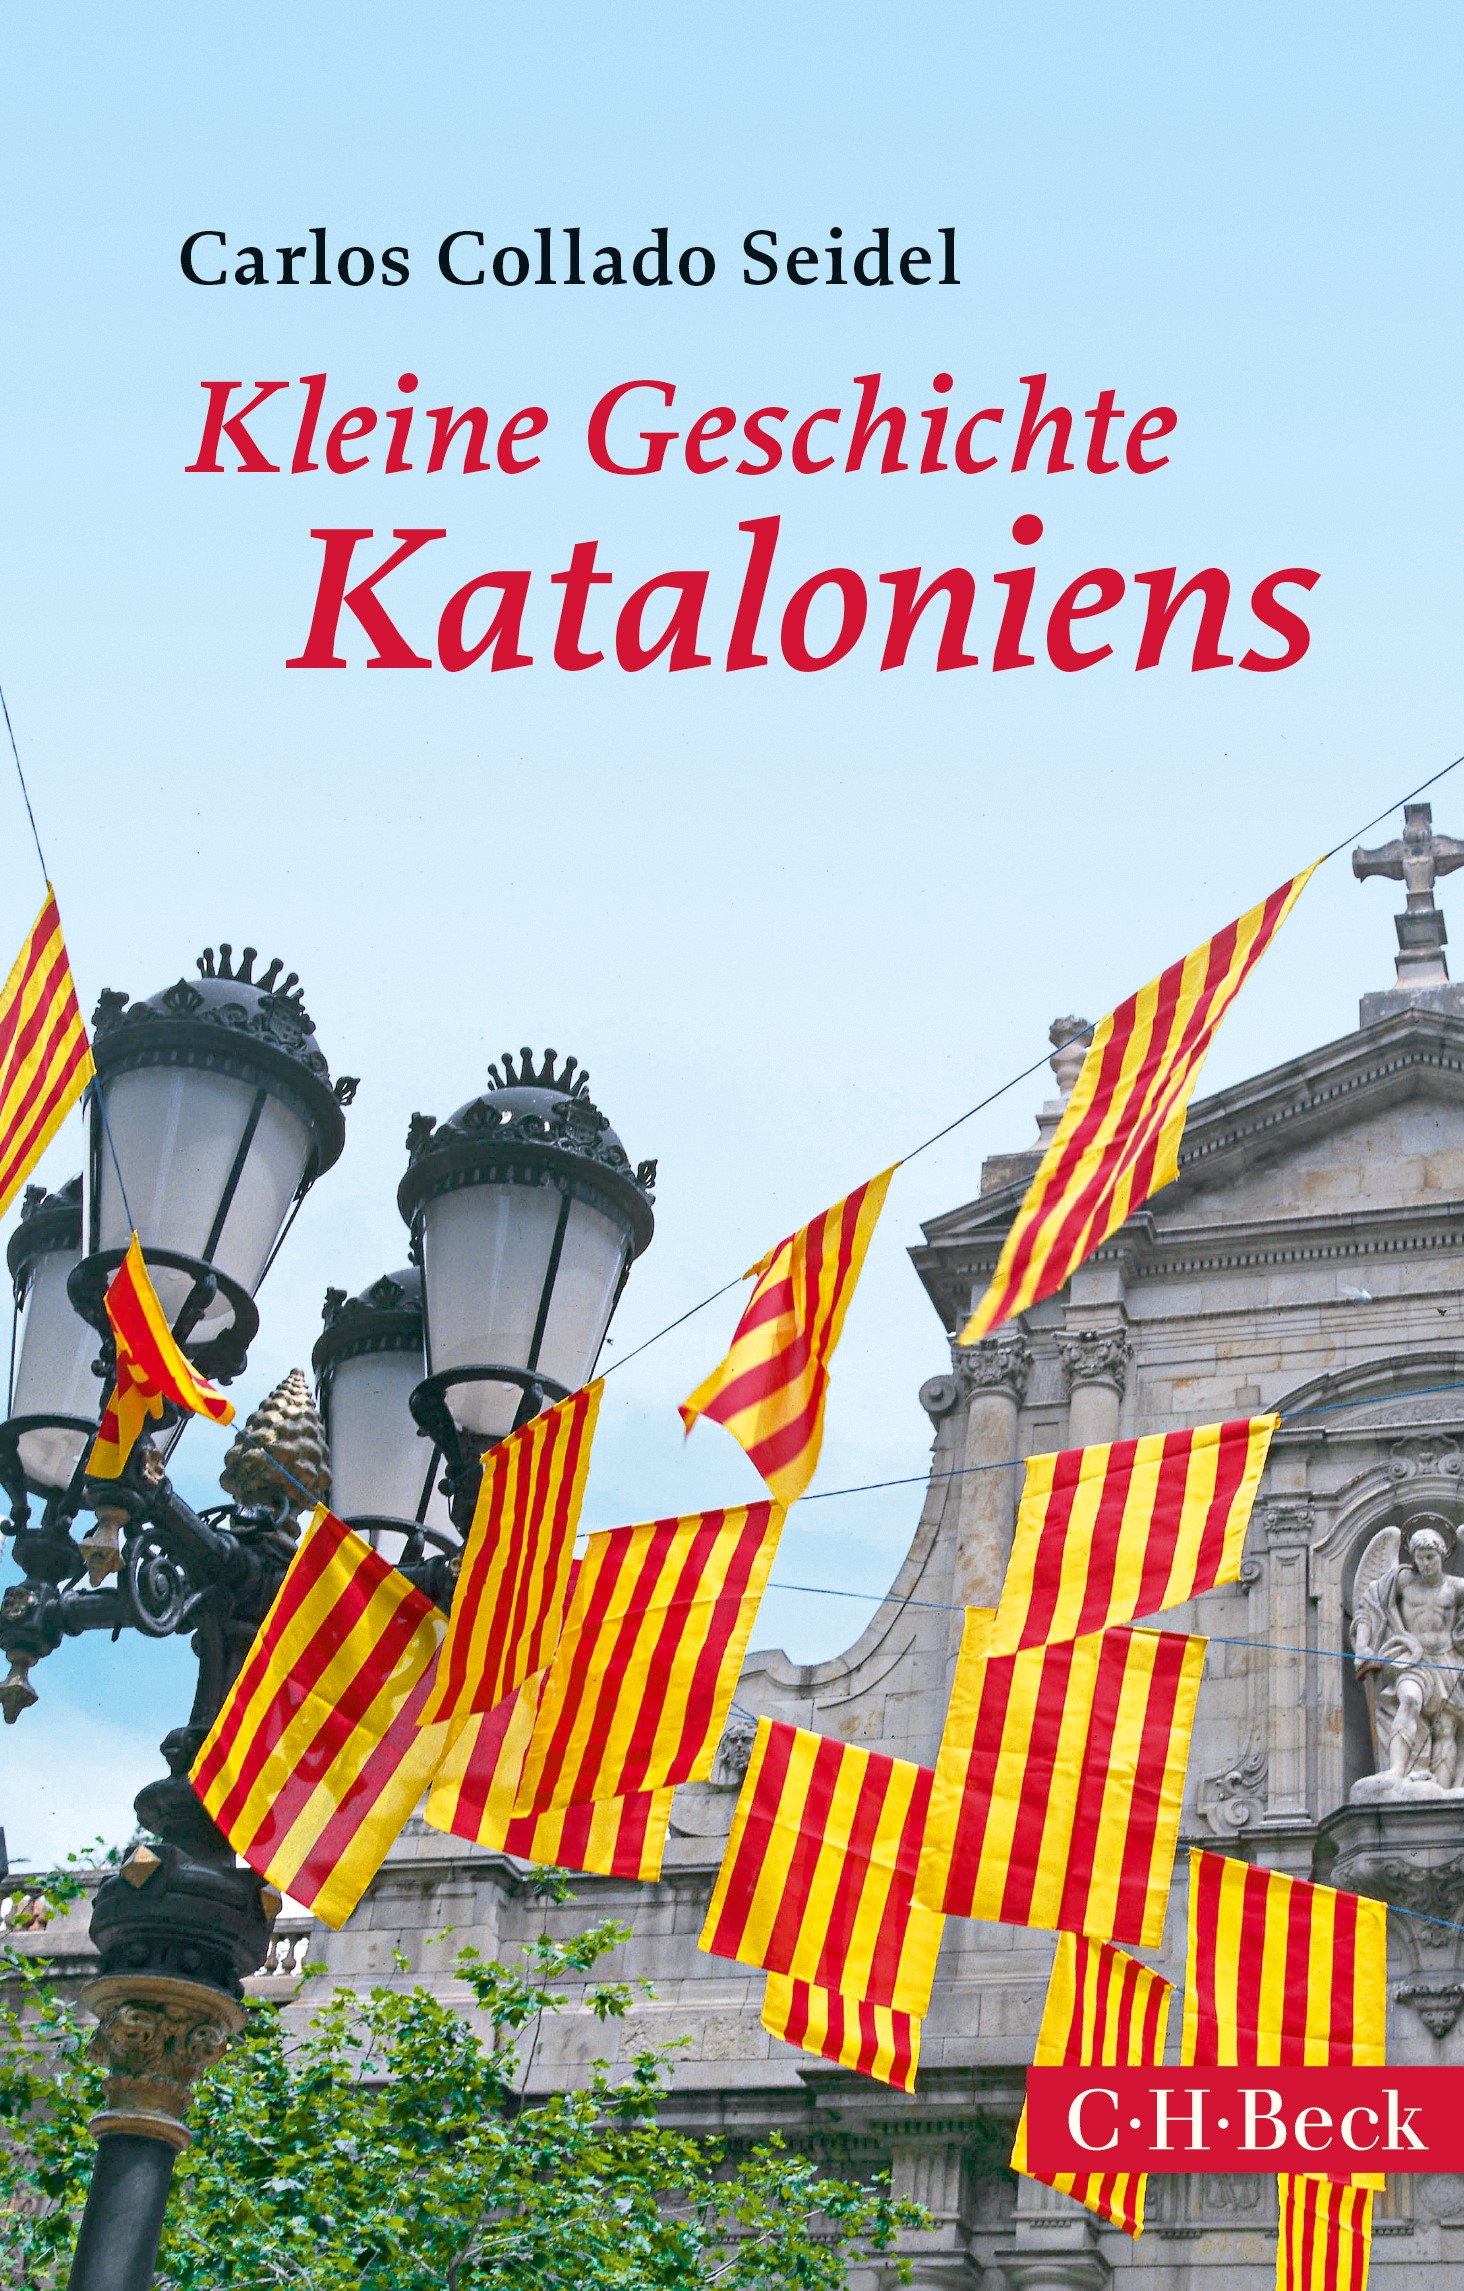 Cover: Collado Seidel, Carlos, Kleine Geschichte Kataloniens